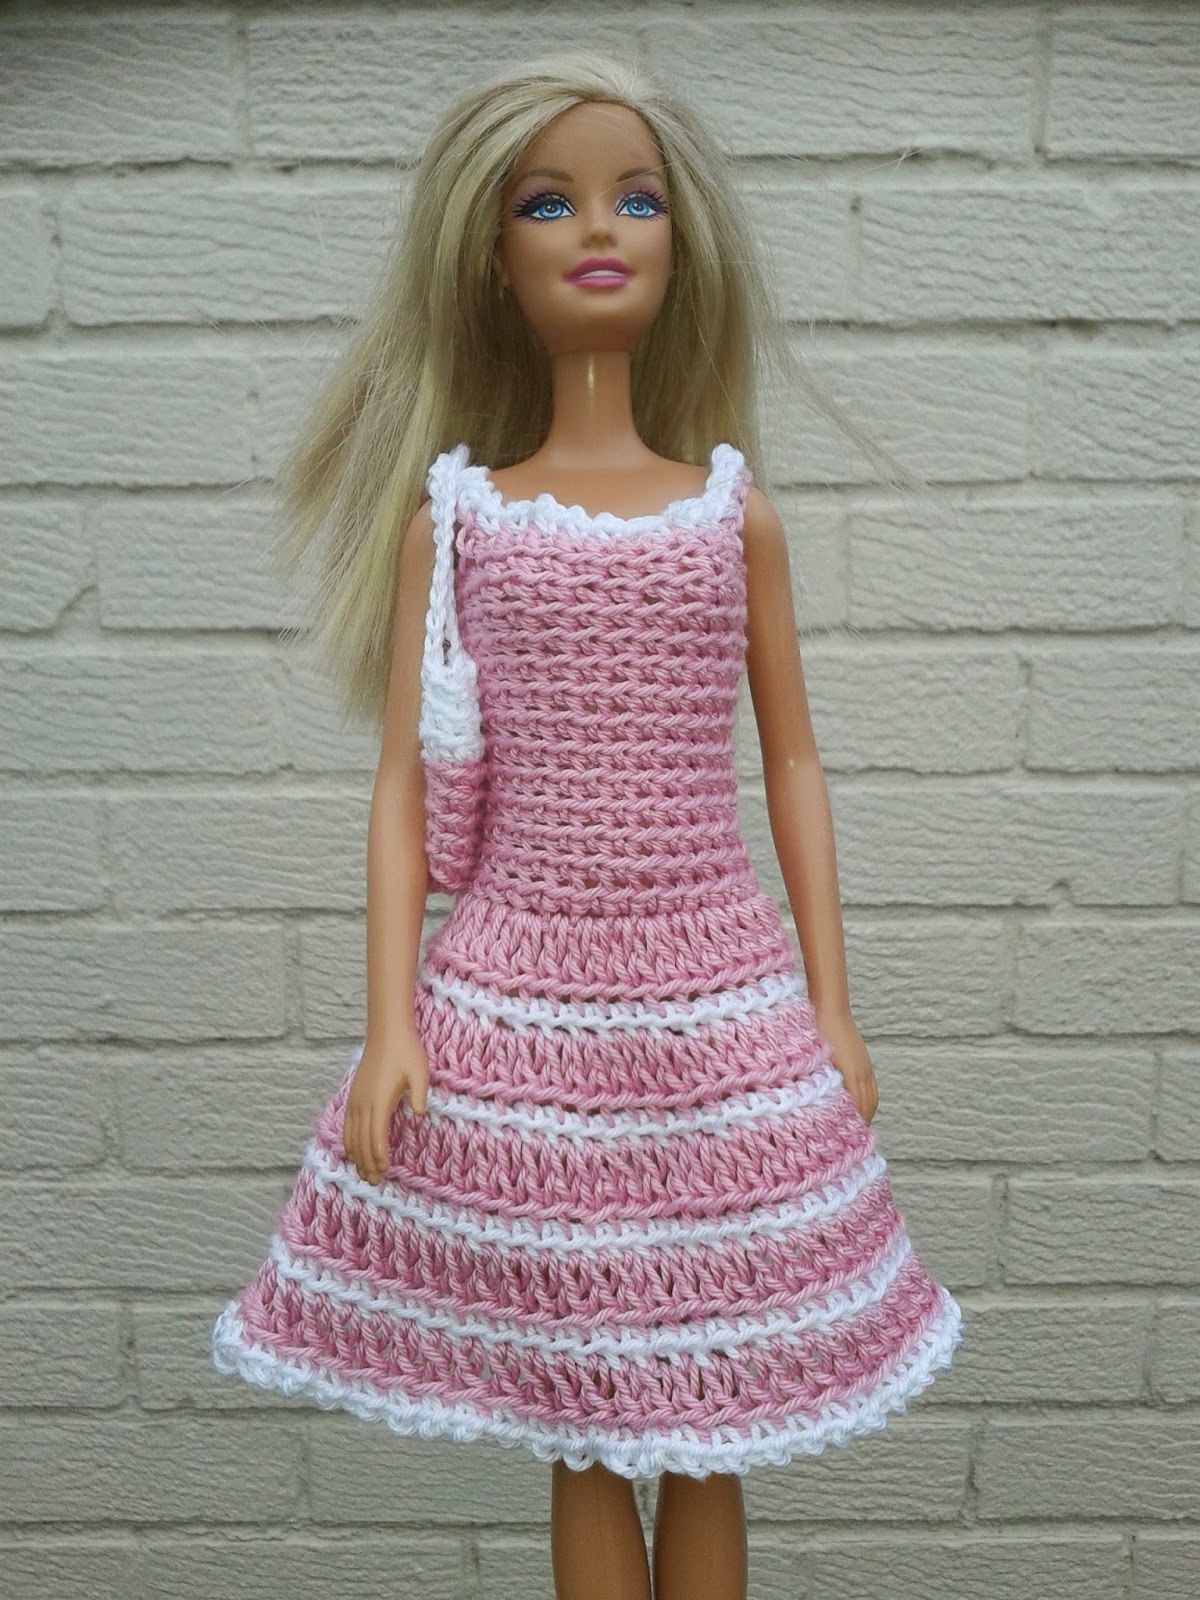 Crochet barbie dress